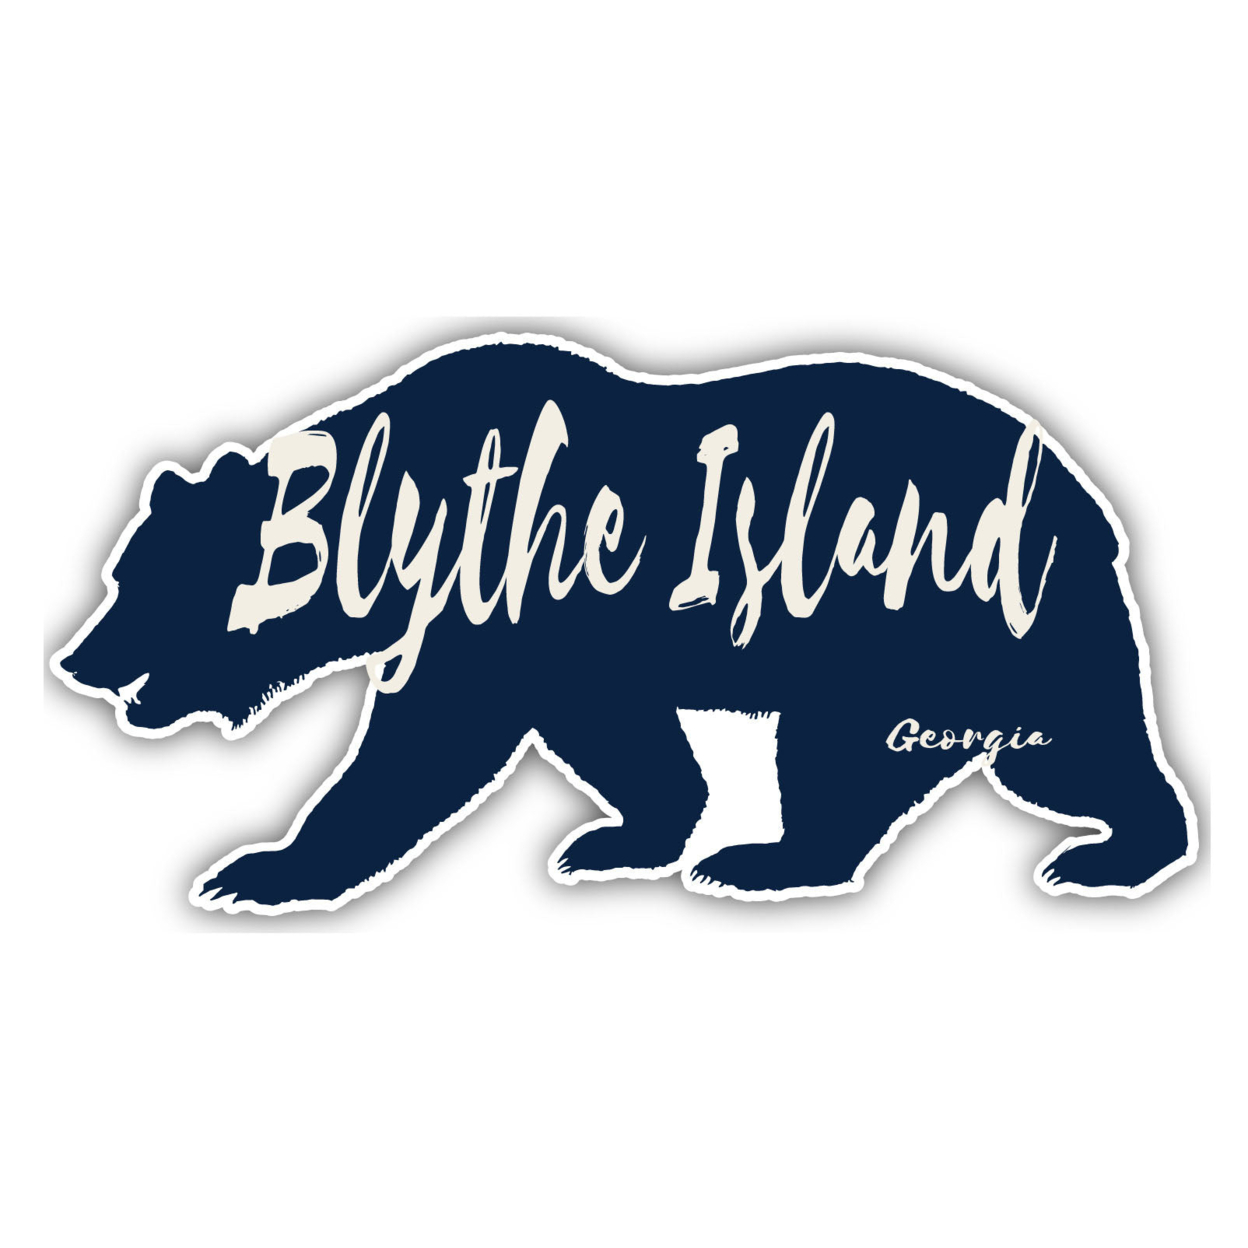 Blythe Island Georgia Souvenir Decorative Stickers (Choose Theme And Size) - Single Unit, 6-Inch, Bear